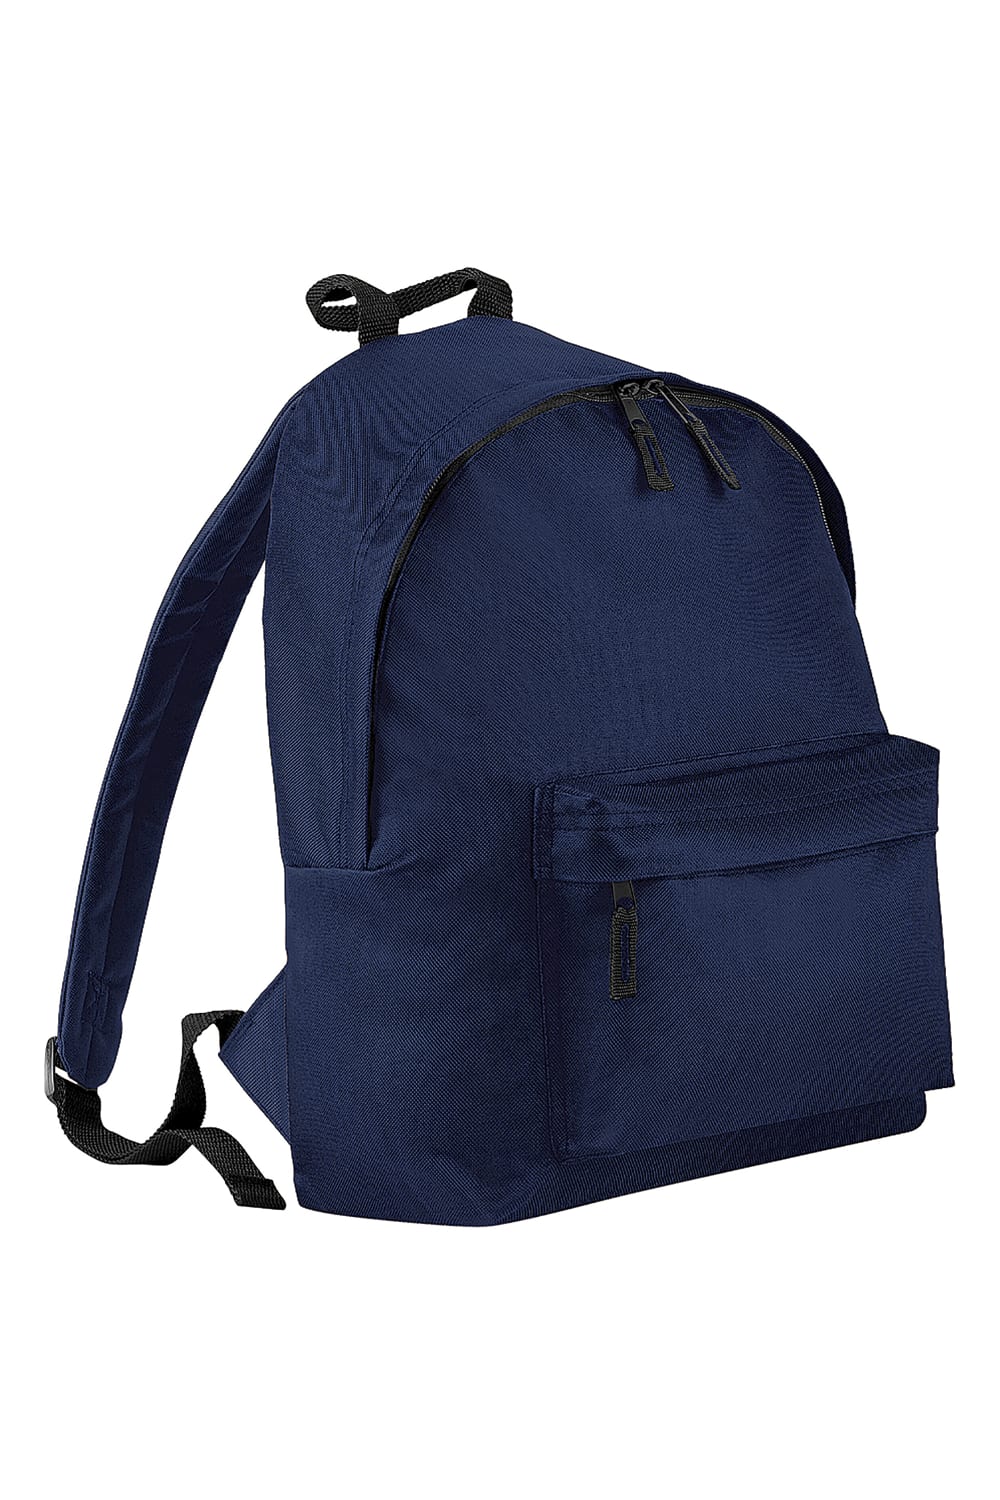 Fashion Backpack/Rucksack - French Navy